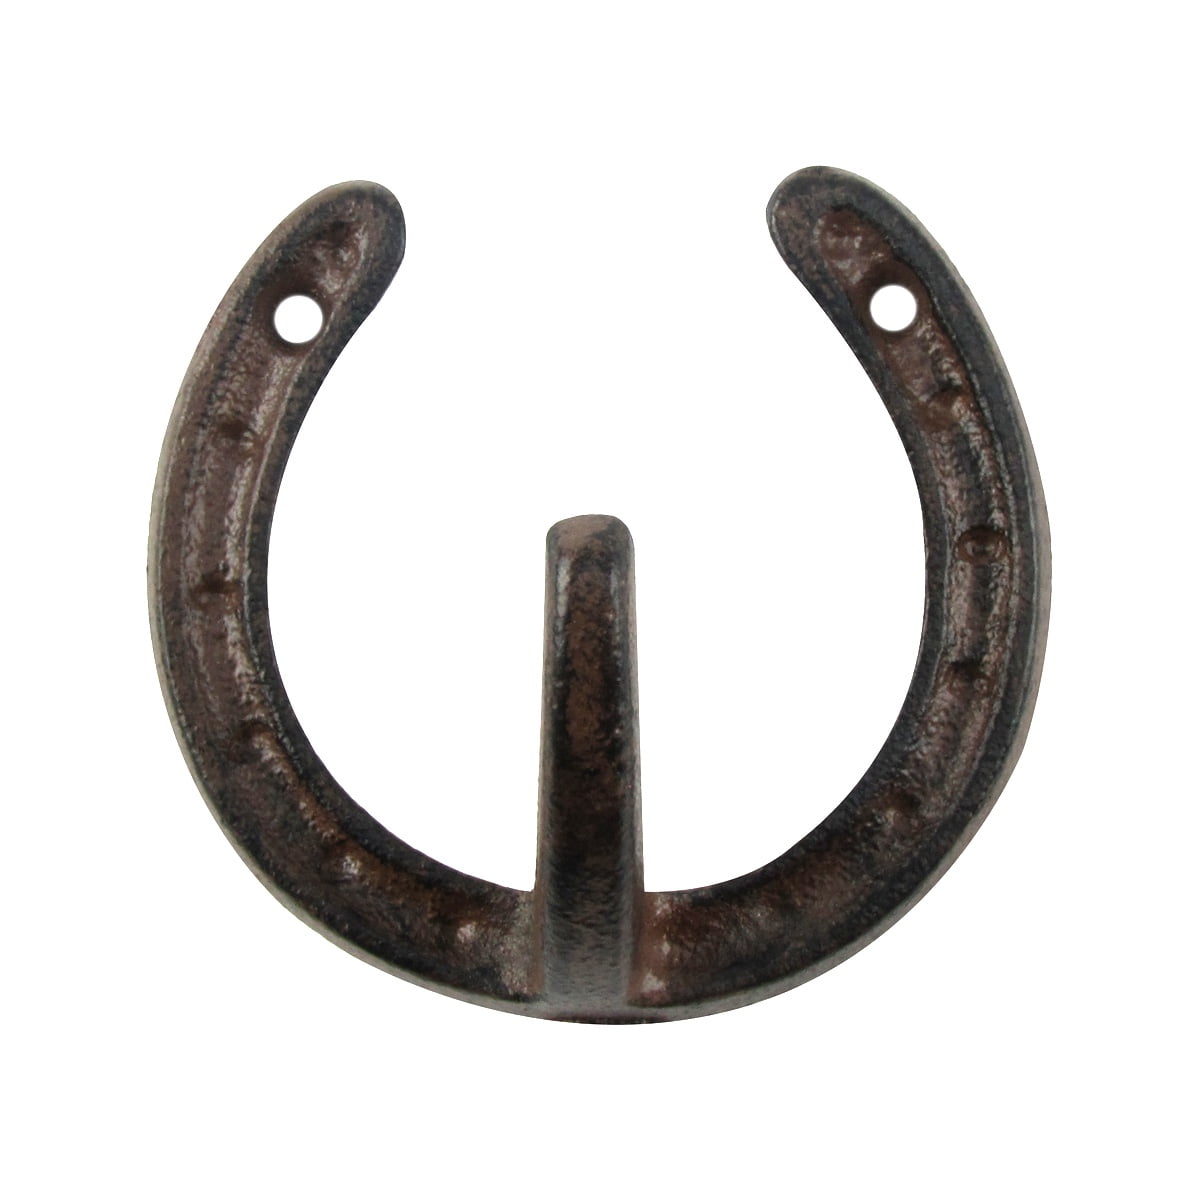 6 Rustic Western Cast Iron Horseshoe Horse Hook Key Coat Hanger Wall Mount Rack 